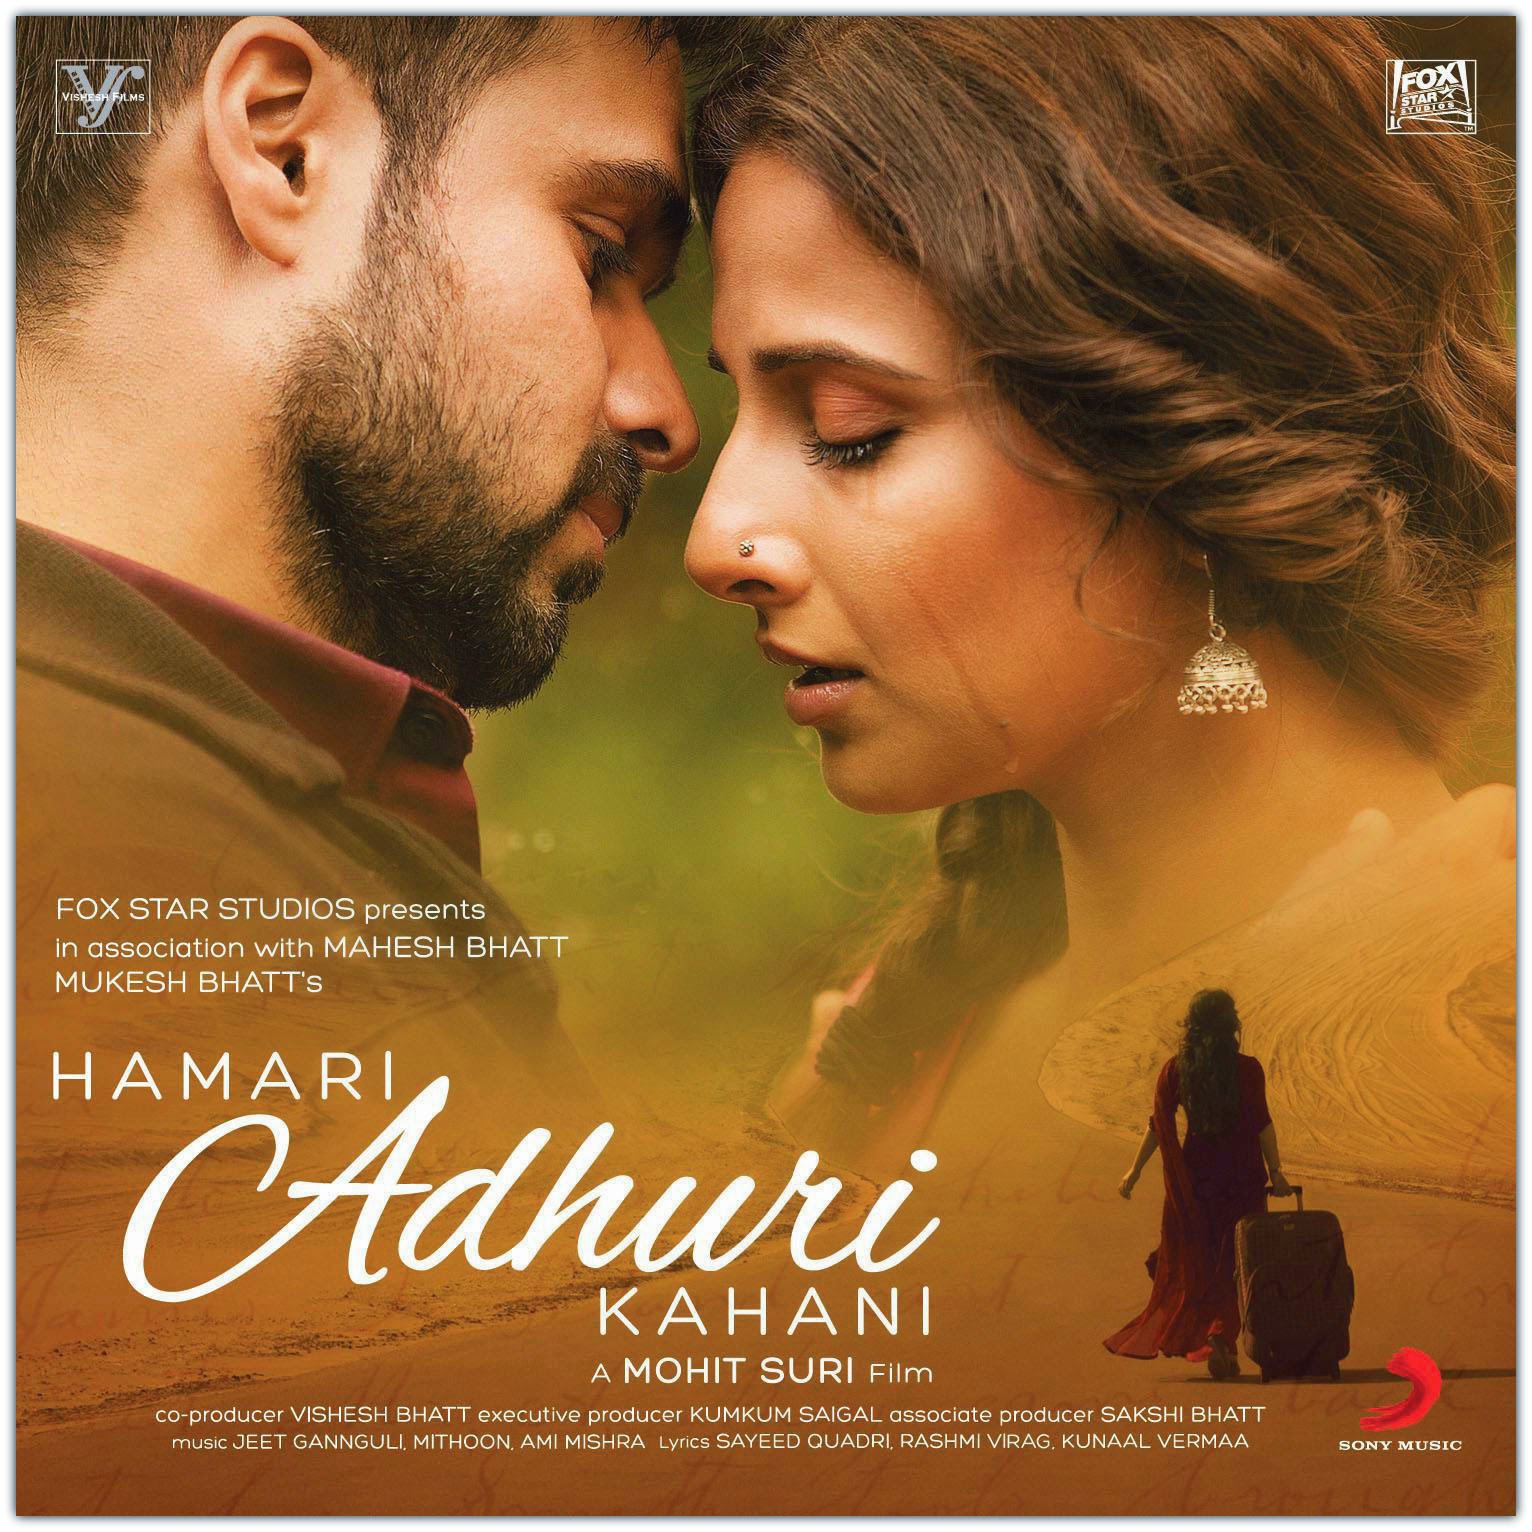 Hindi Mp3 Songs: Hamari Adhuri Kahani (2015) Hindi Movie mp3 Songs